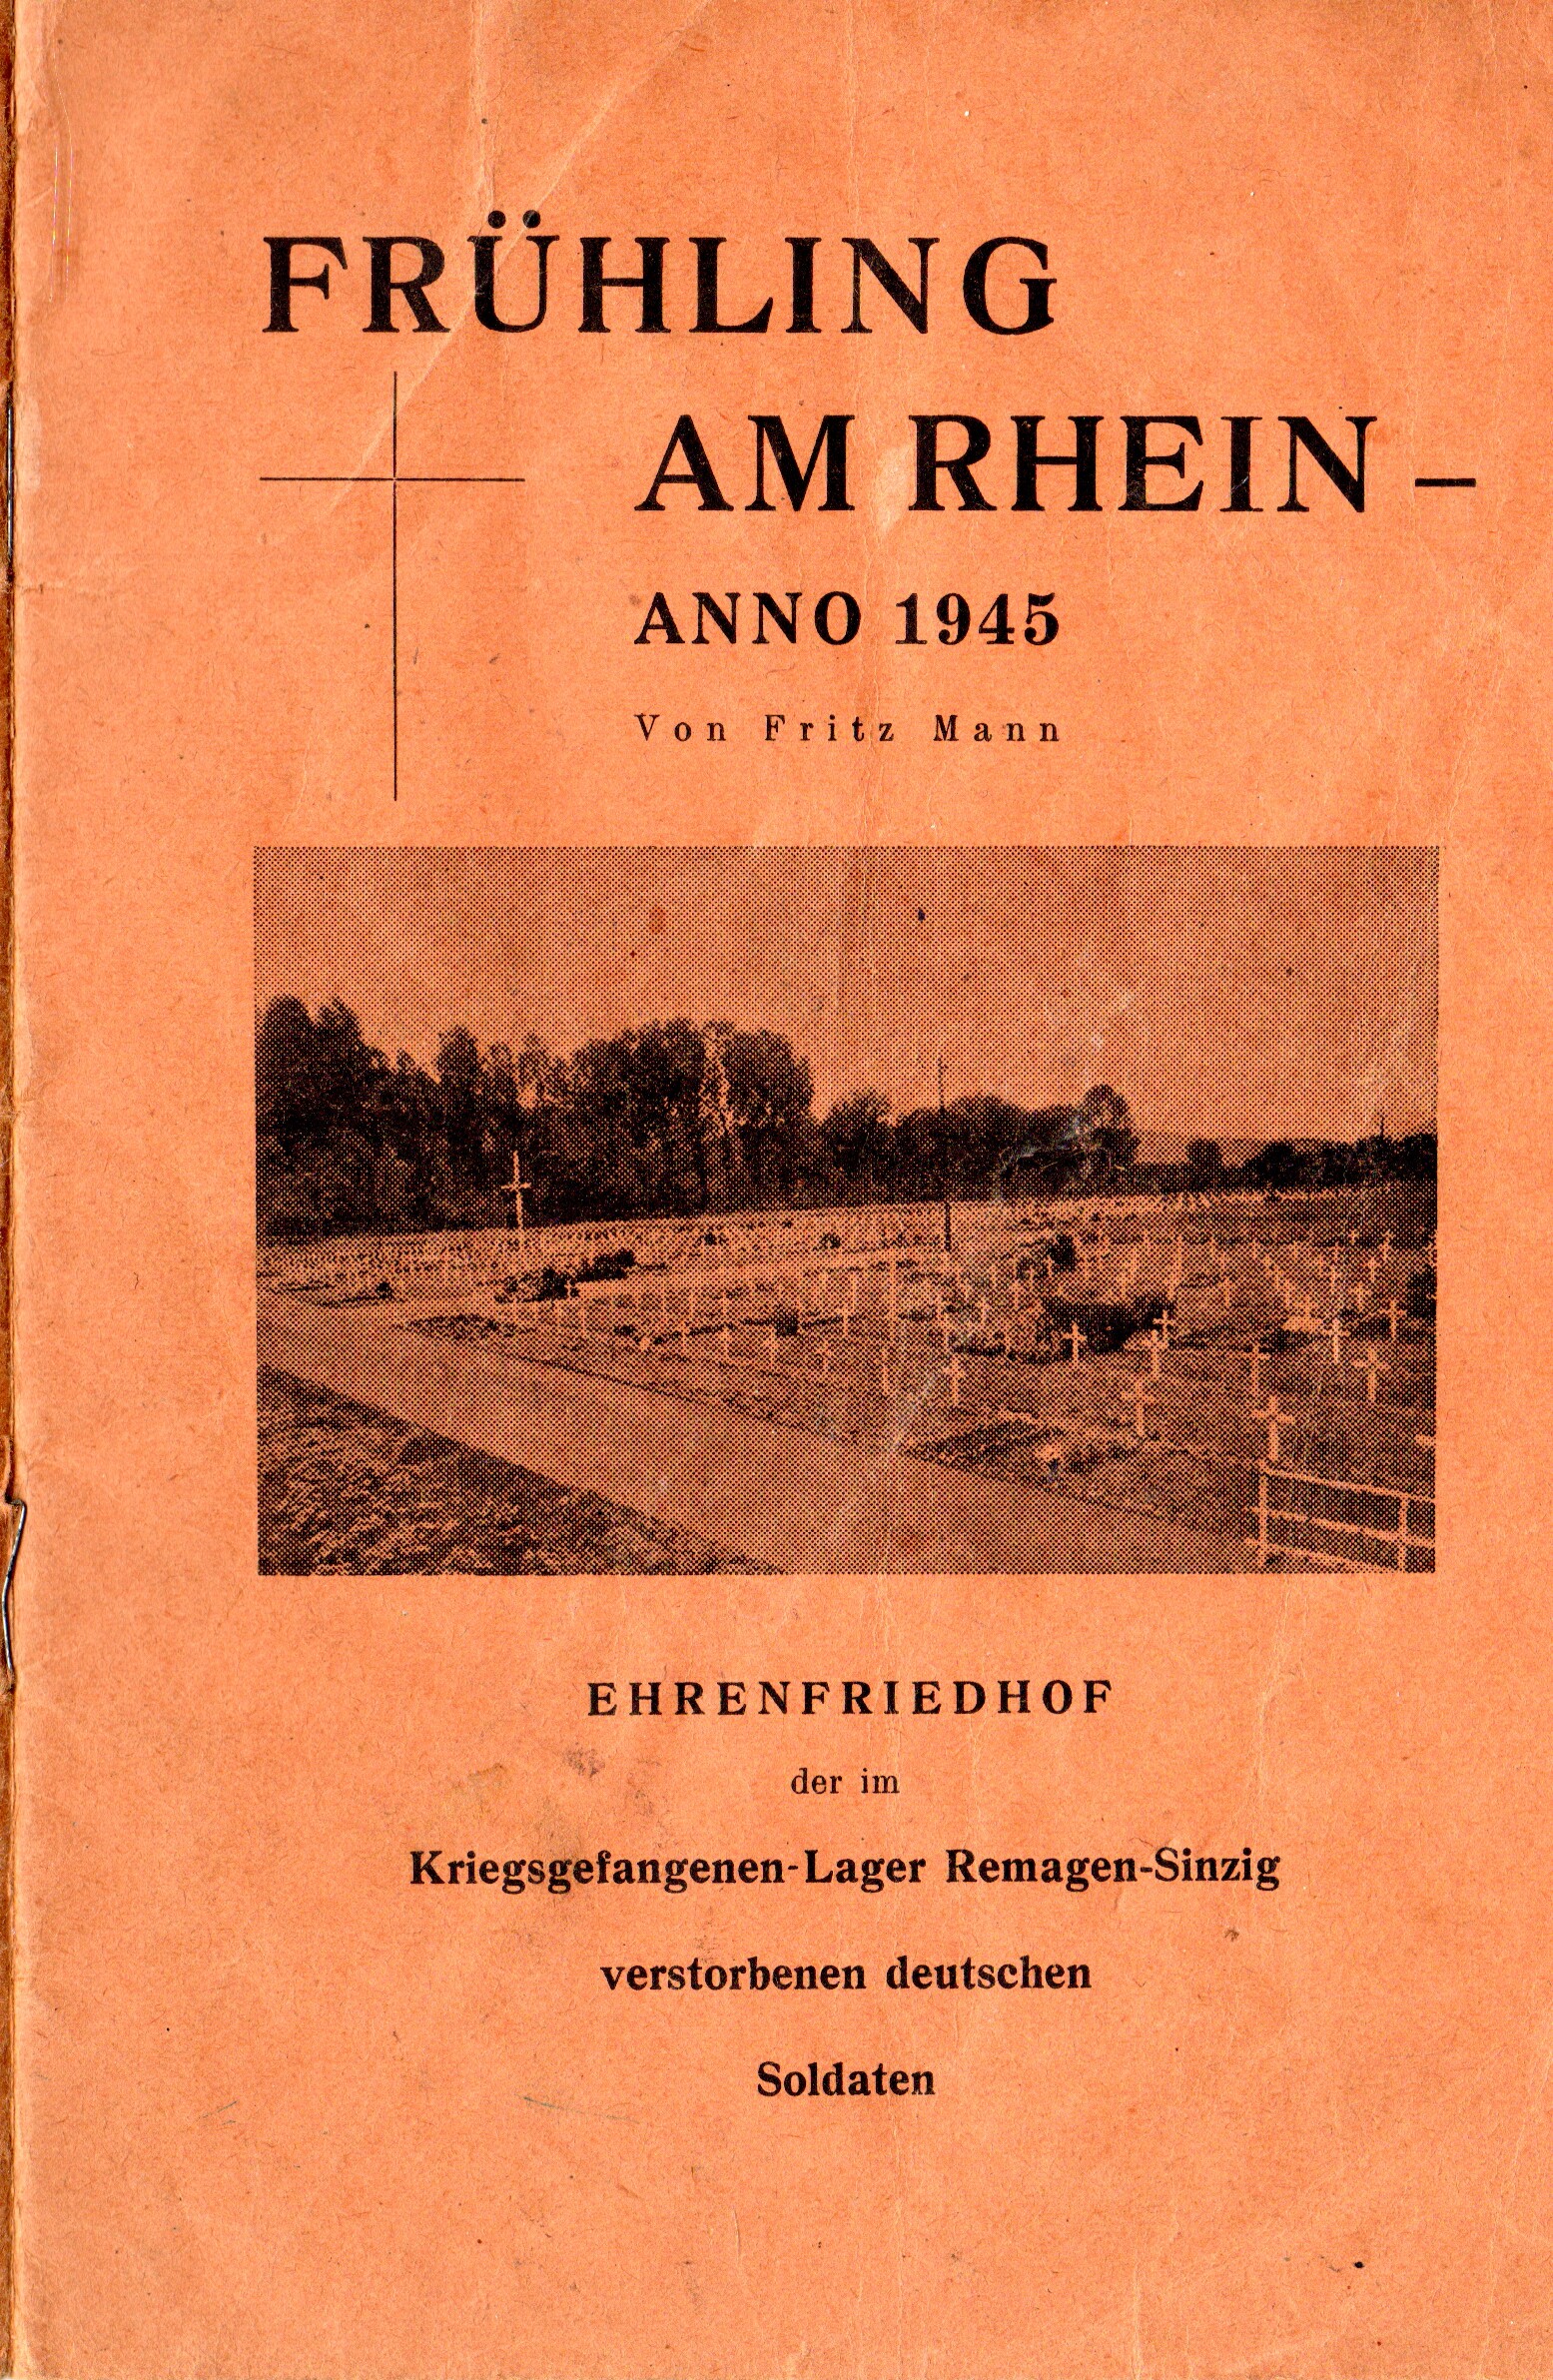 Frühling am Rhein - Anno 1945 (Heimatarchiv Bad Bodendorf CC BY-NC-SA)